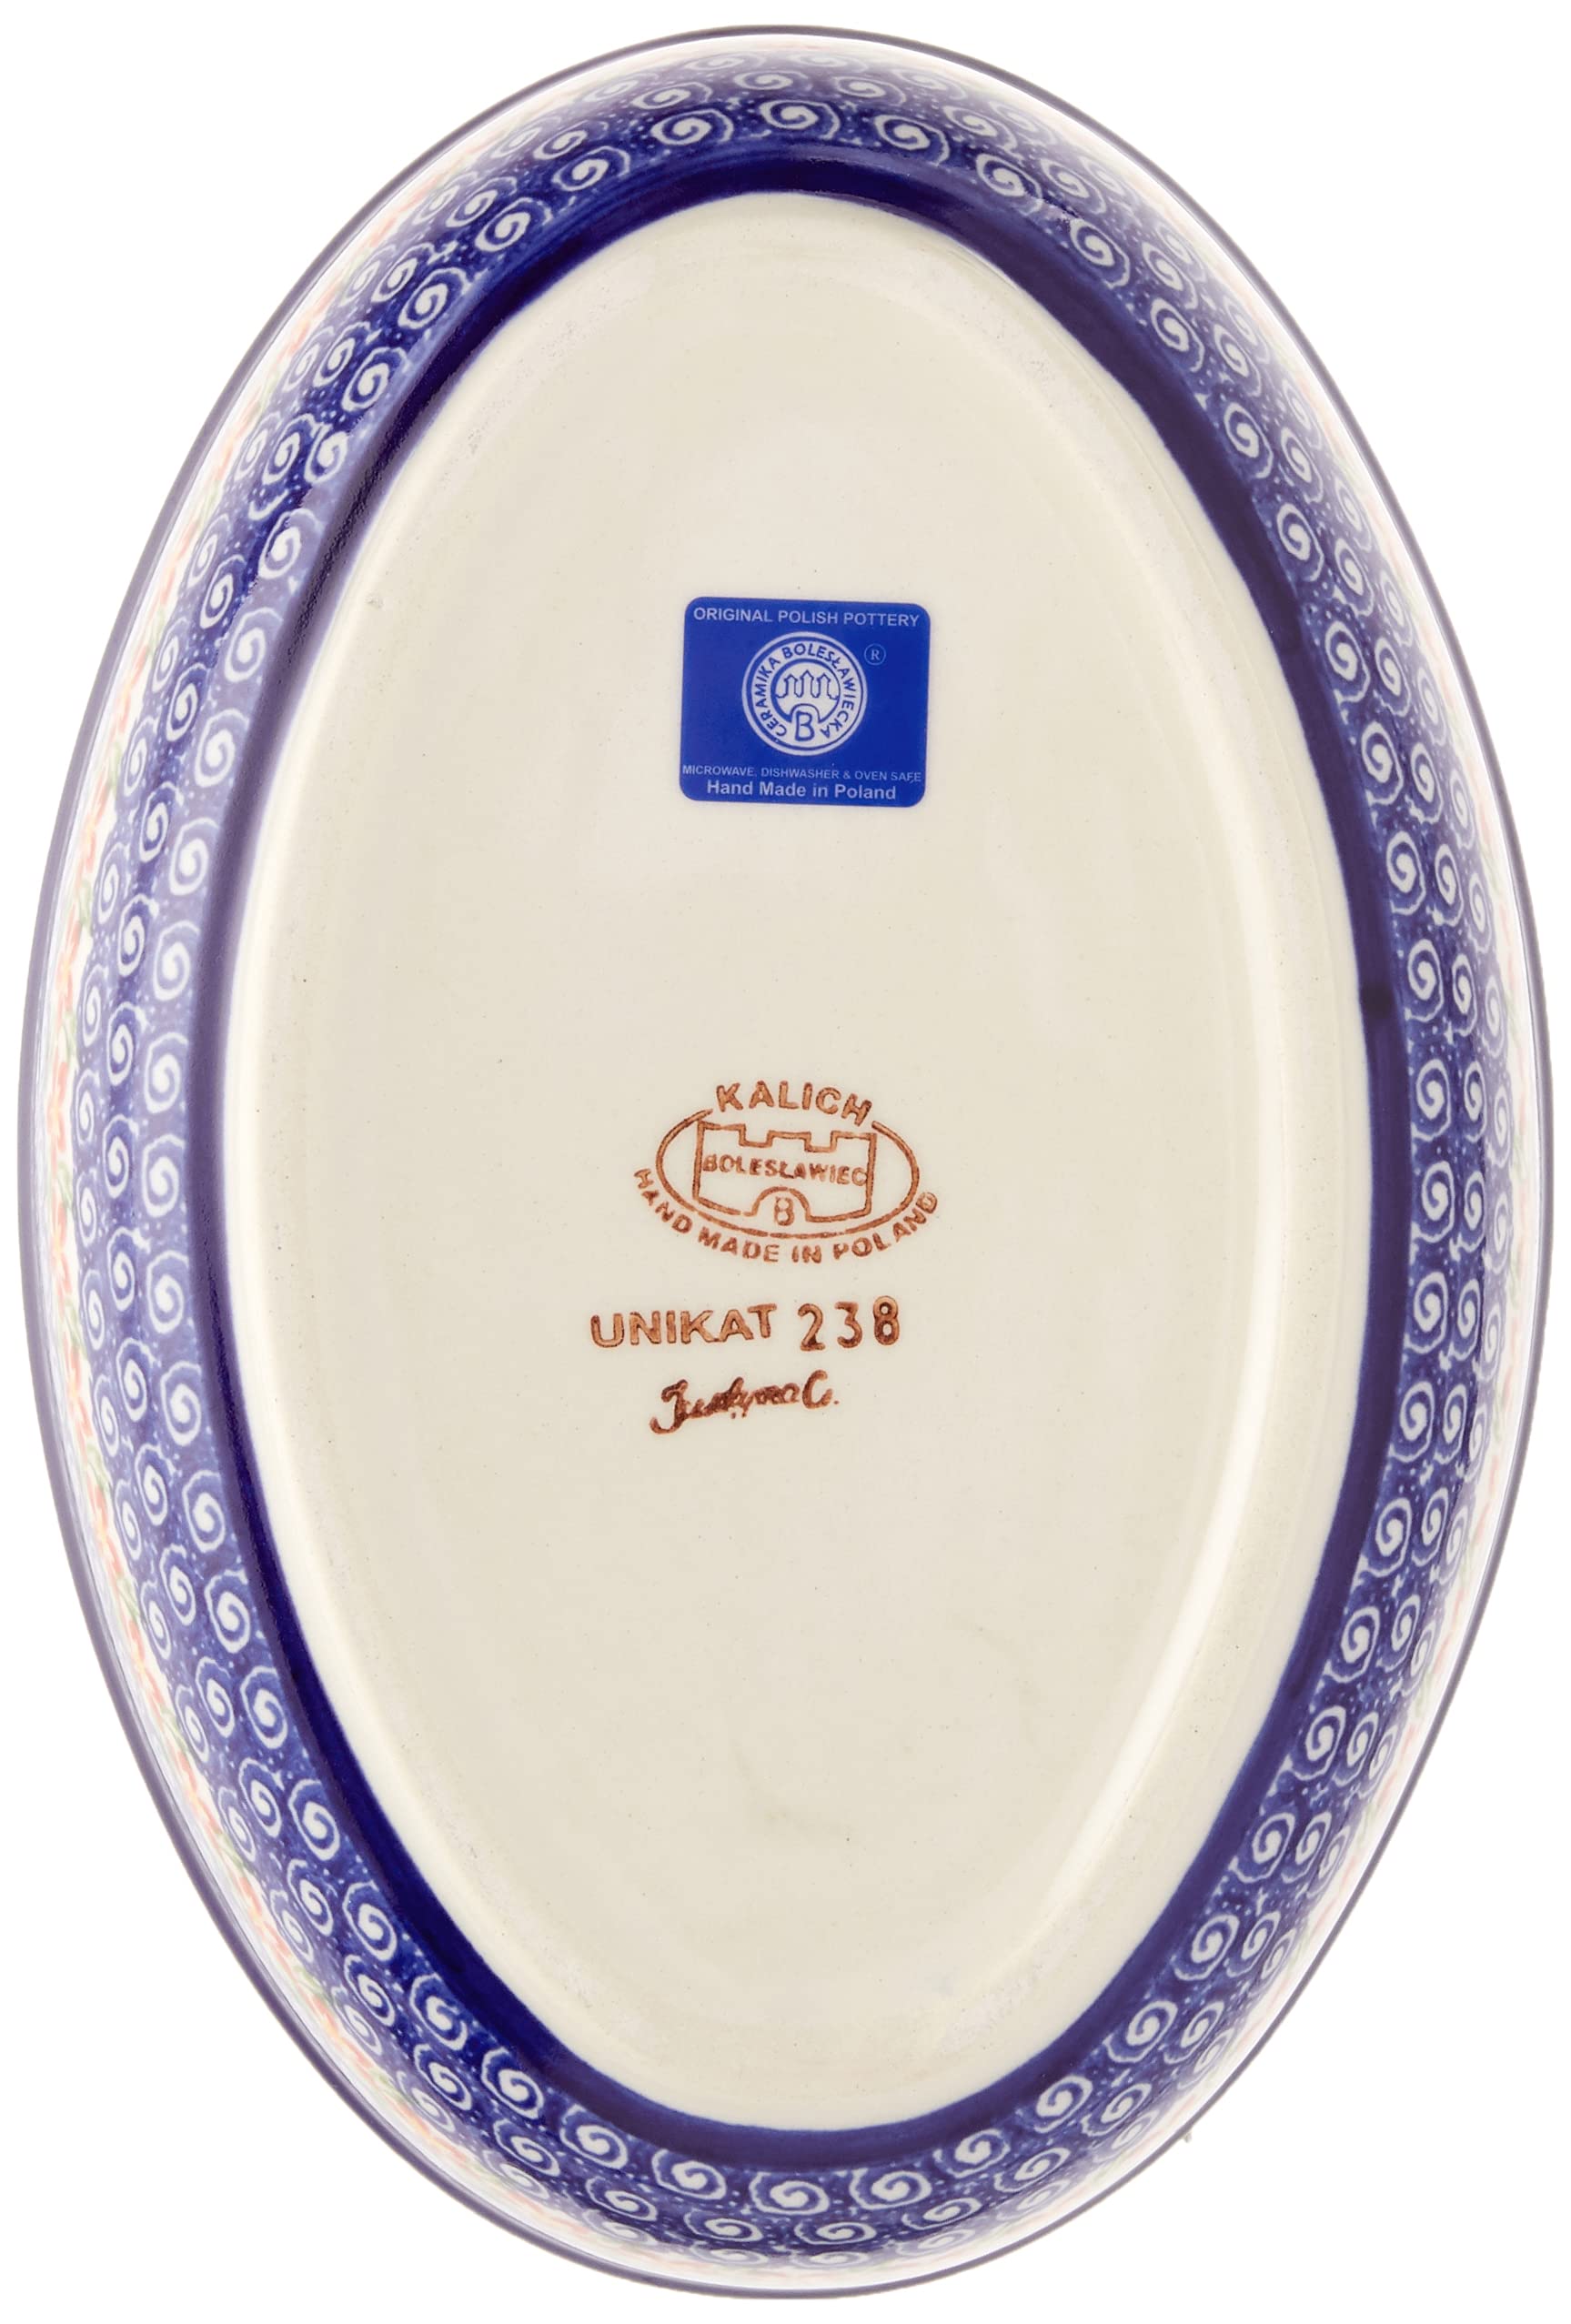 Liphontcta Polish Pottery Ceramika Boleslawiec Oval Mirek Baker 2, 9-2/3-Inch by 6-7/10-Inch, 5 Cups, Royal Blue Patterns with Red Cornflower and Blue Butterflies Motif